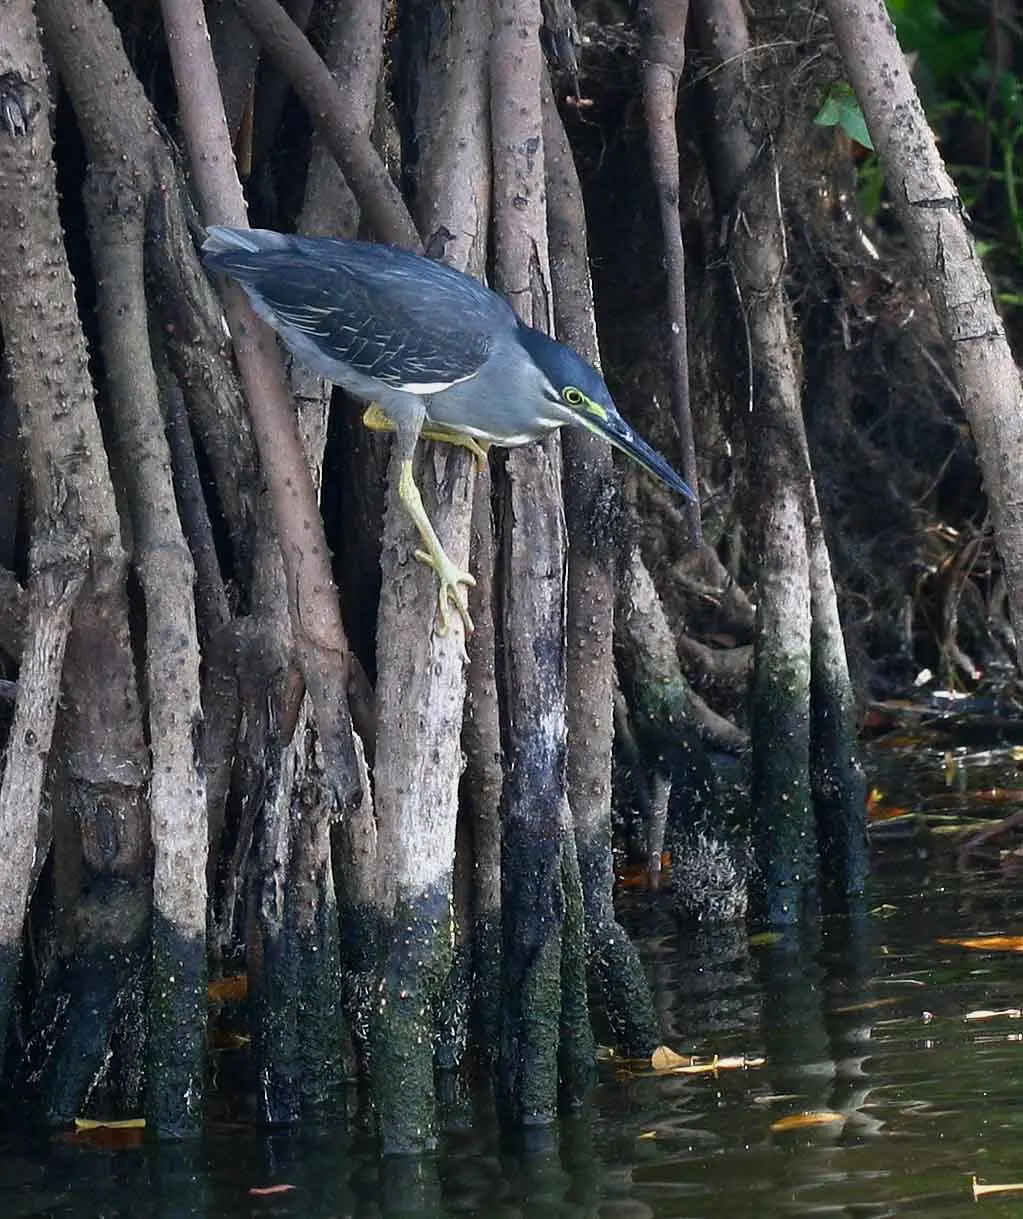 Green heron (Butorides striatus) among mangrove roots, Sri Lanka.